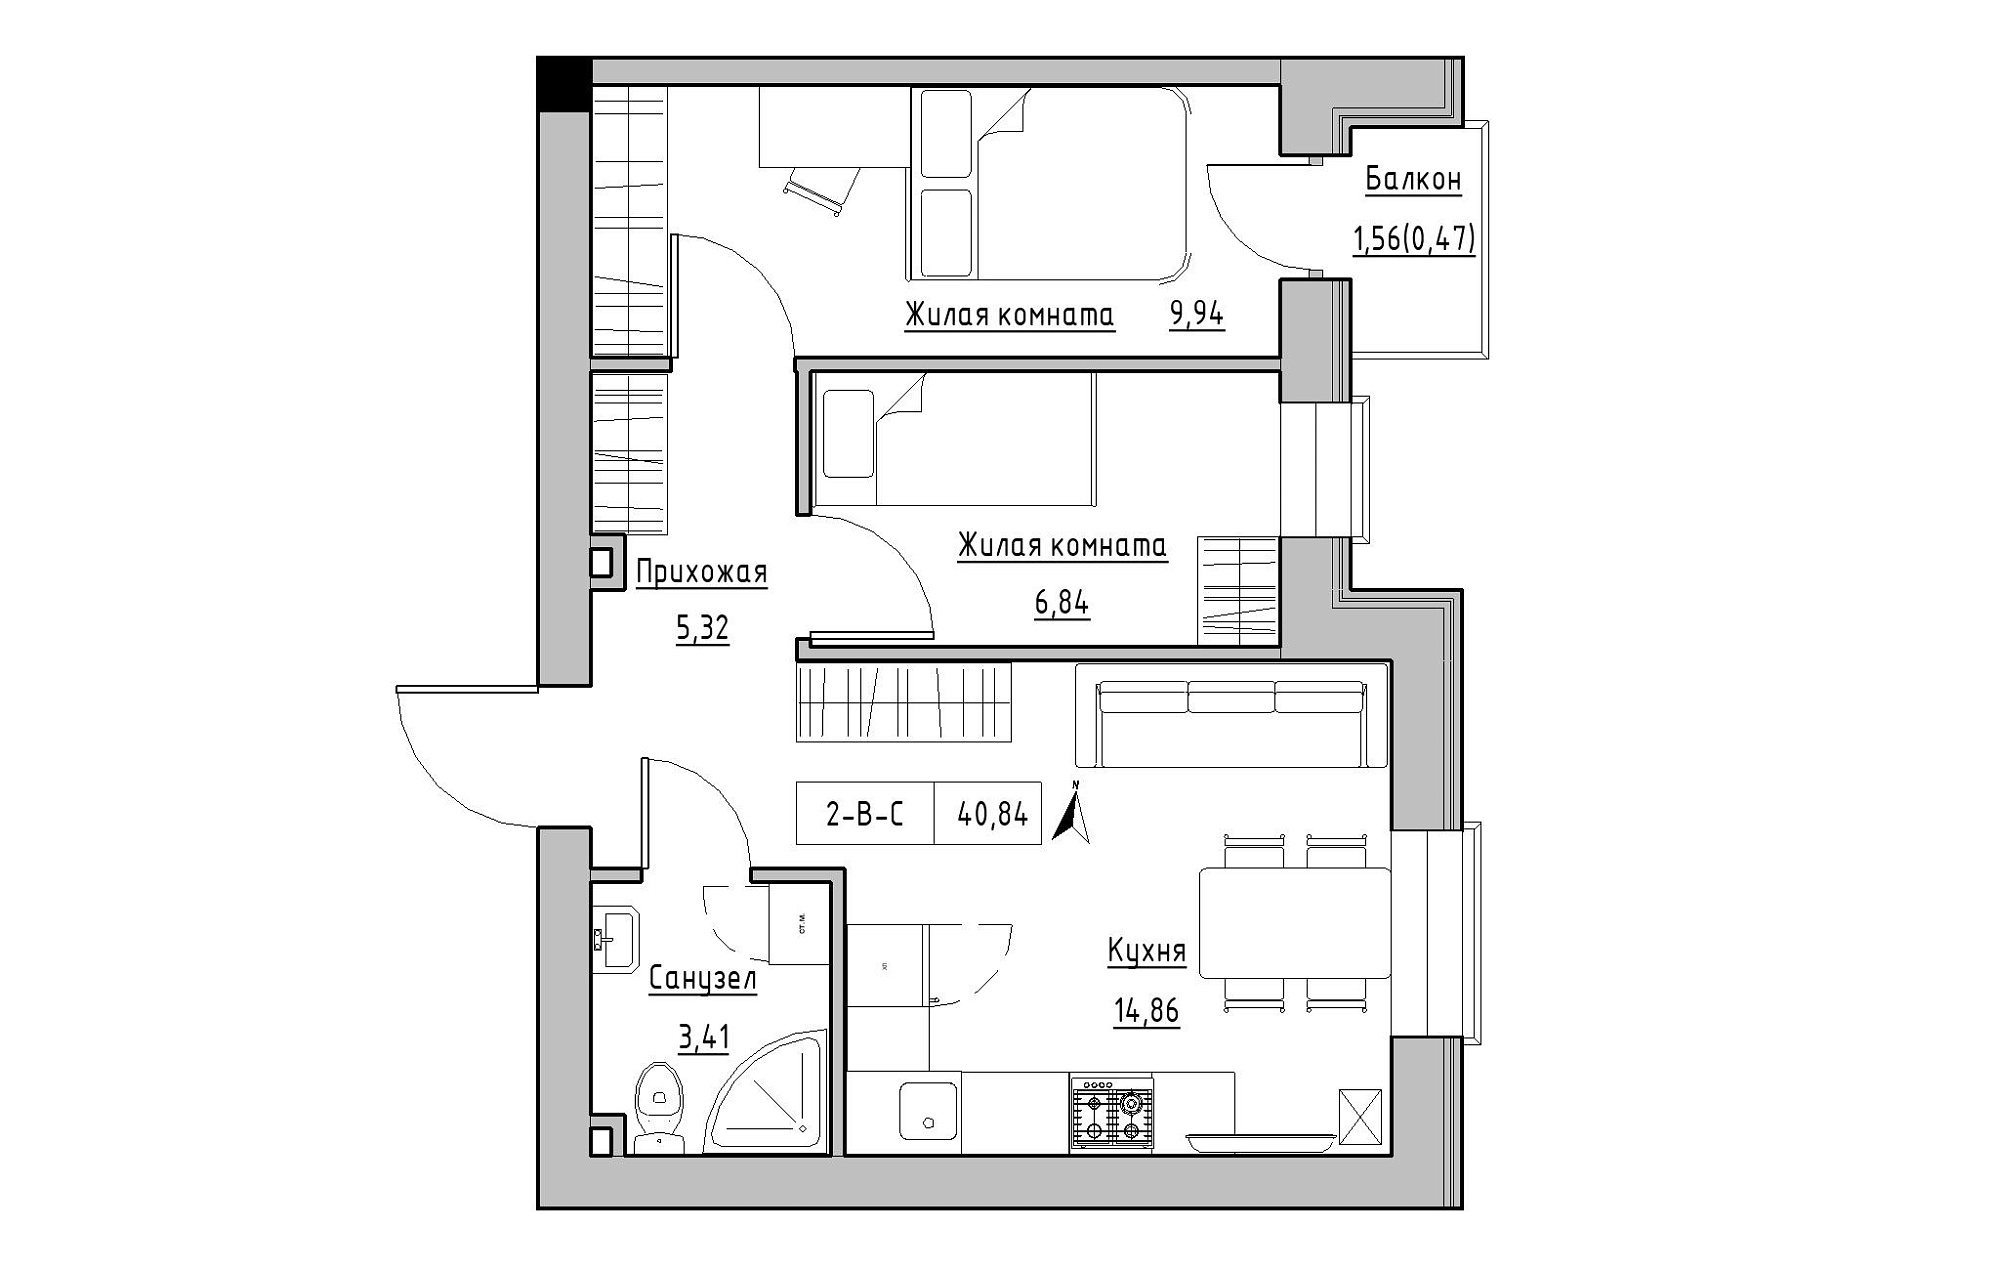 Planning 2-rm flats area 40.84m2, KS-019-03/0006.